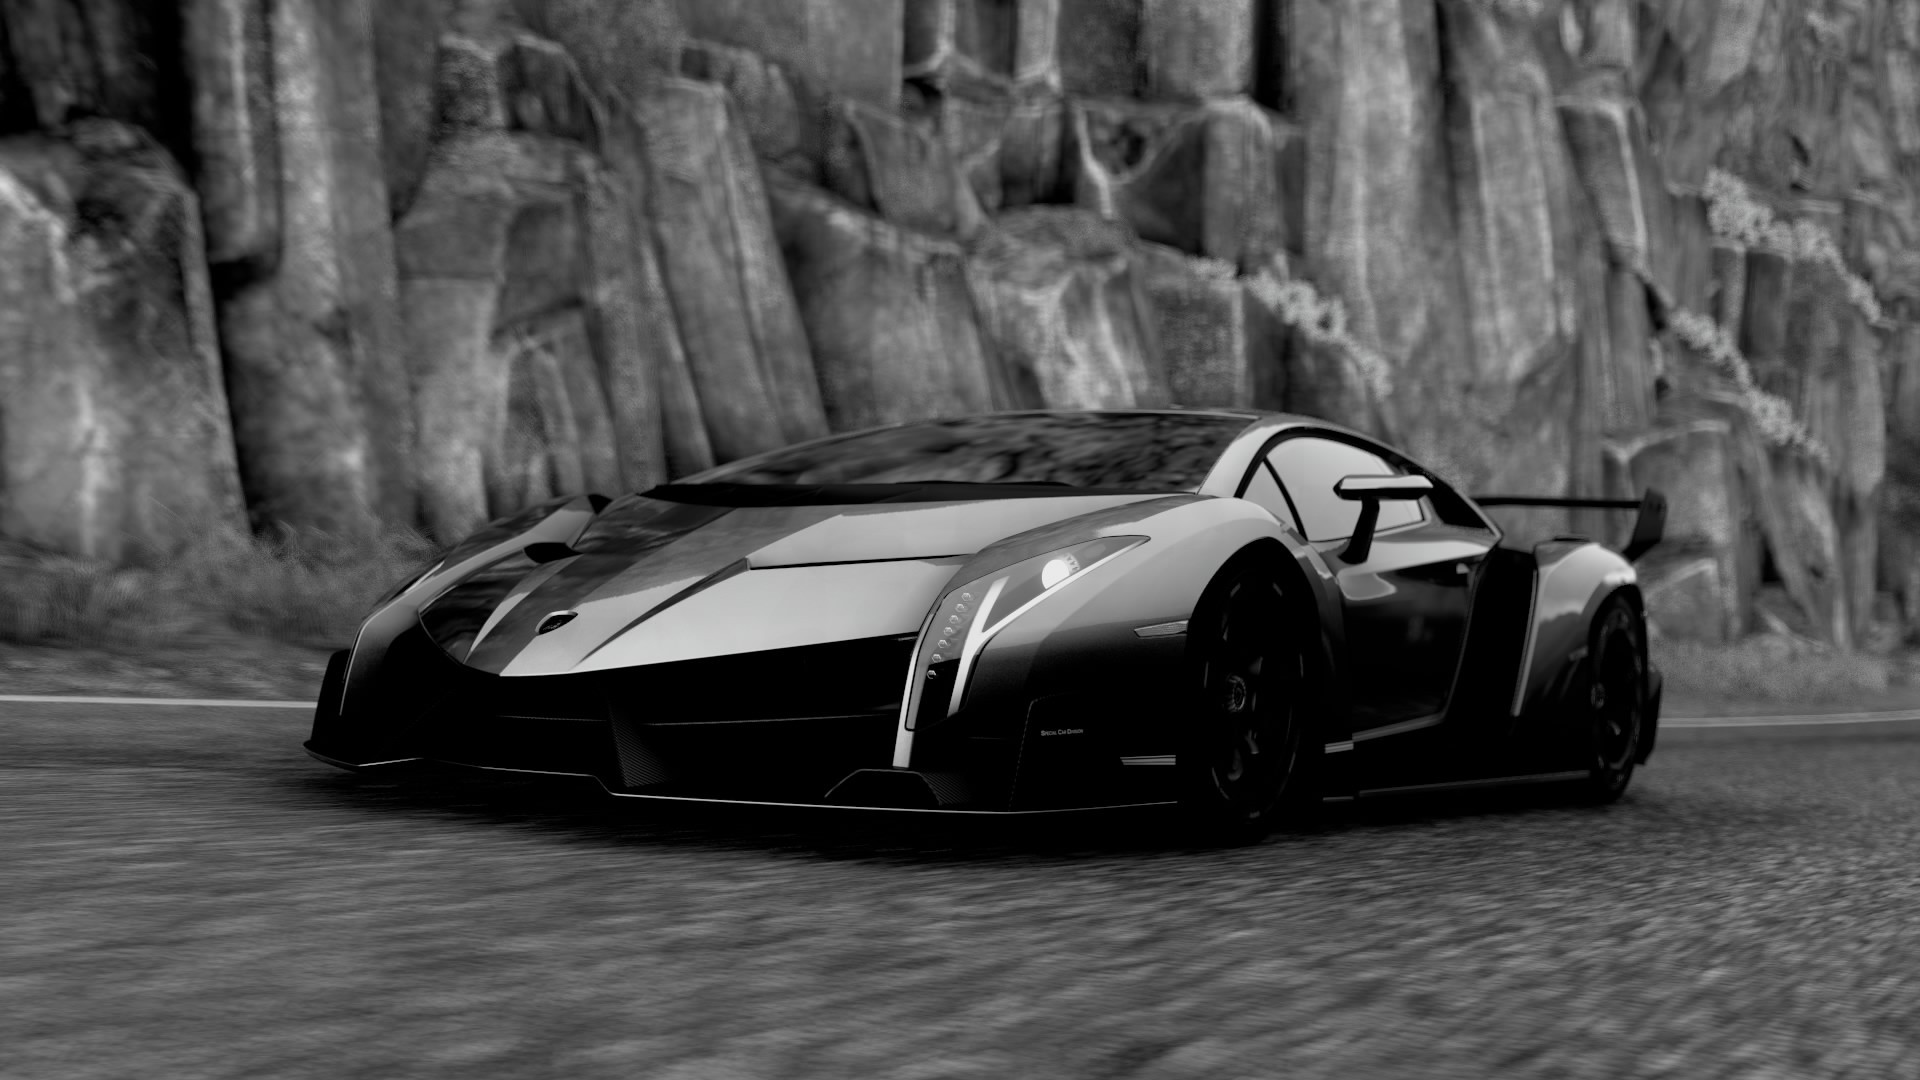 General 1920x1080 Driveclub Lamborghini car Lamborghini Veneno video games monochrome supercars vehicle screen shot